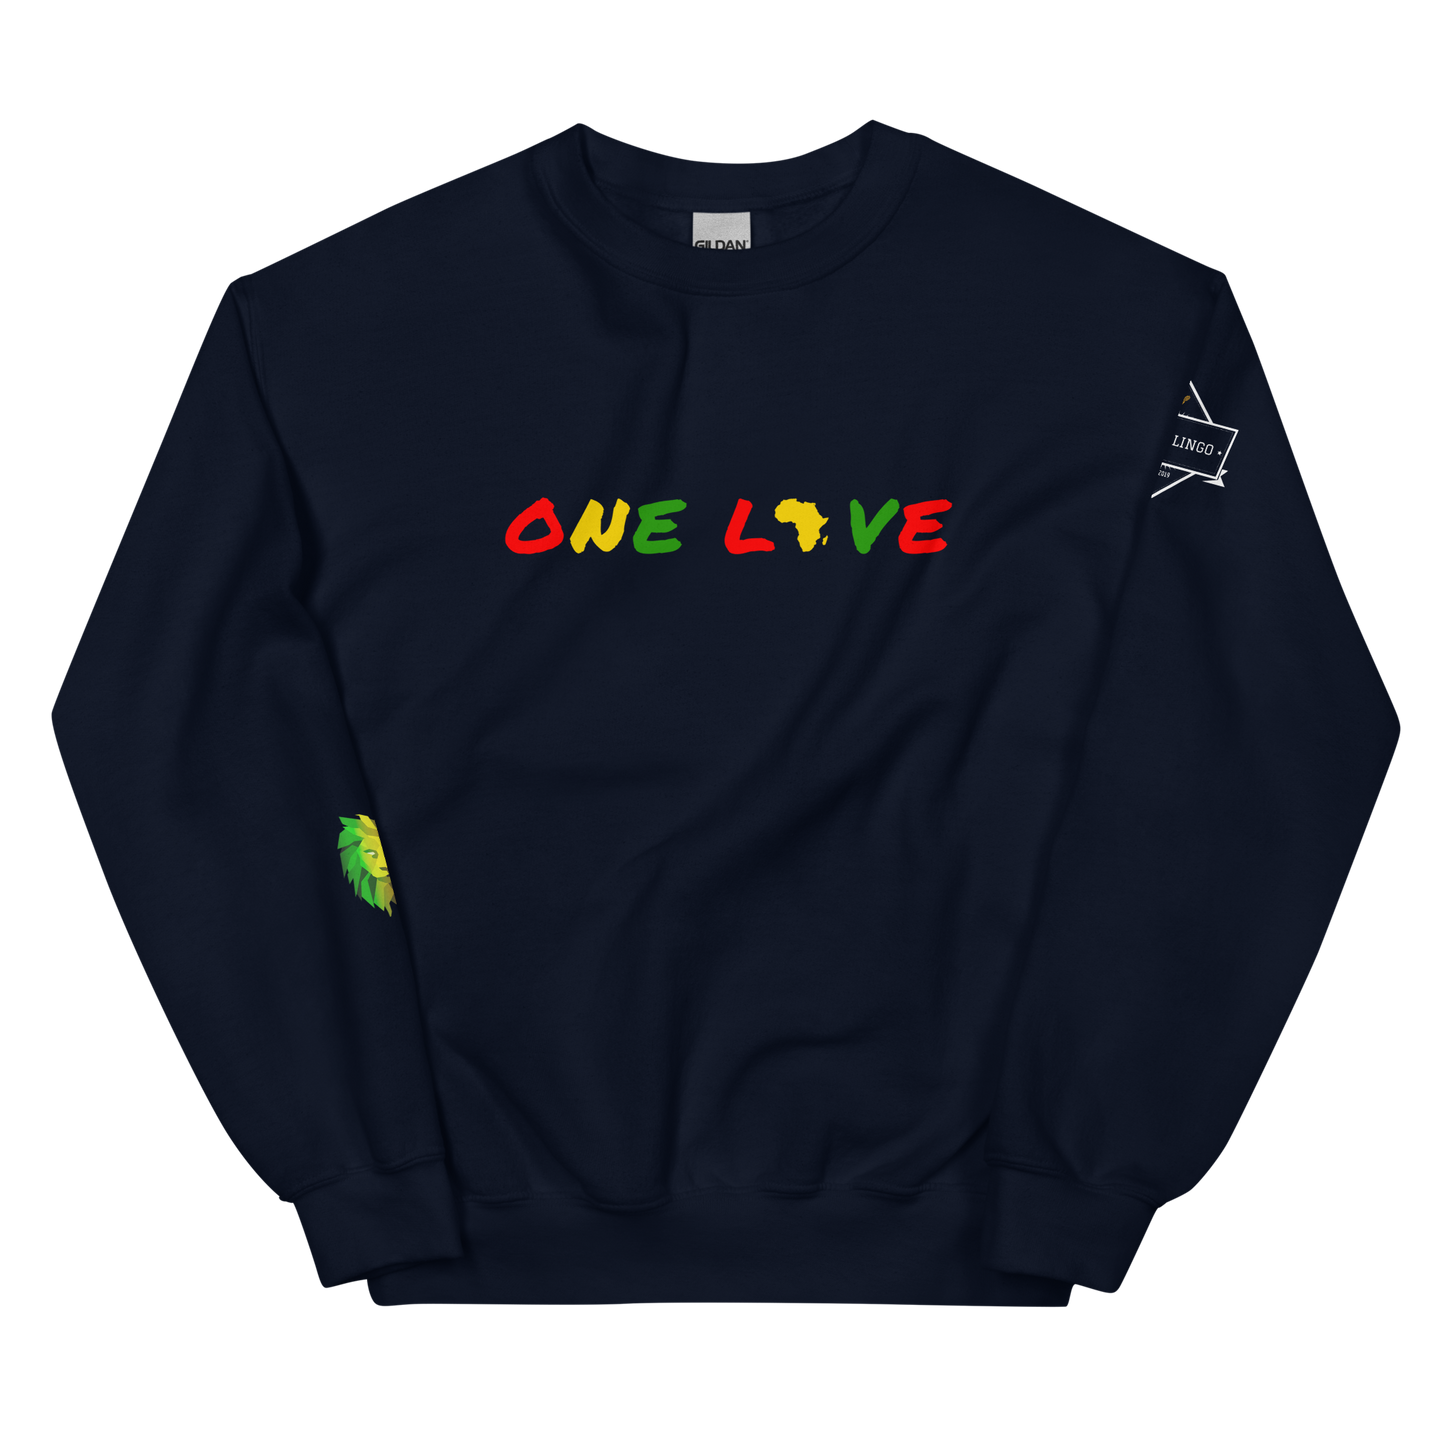 One Love Unisex Sweatshirt